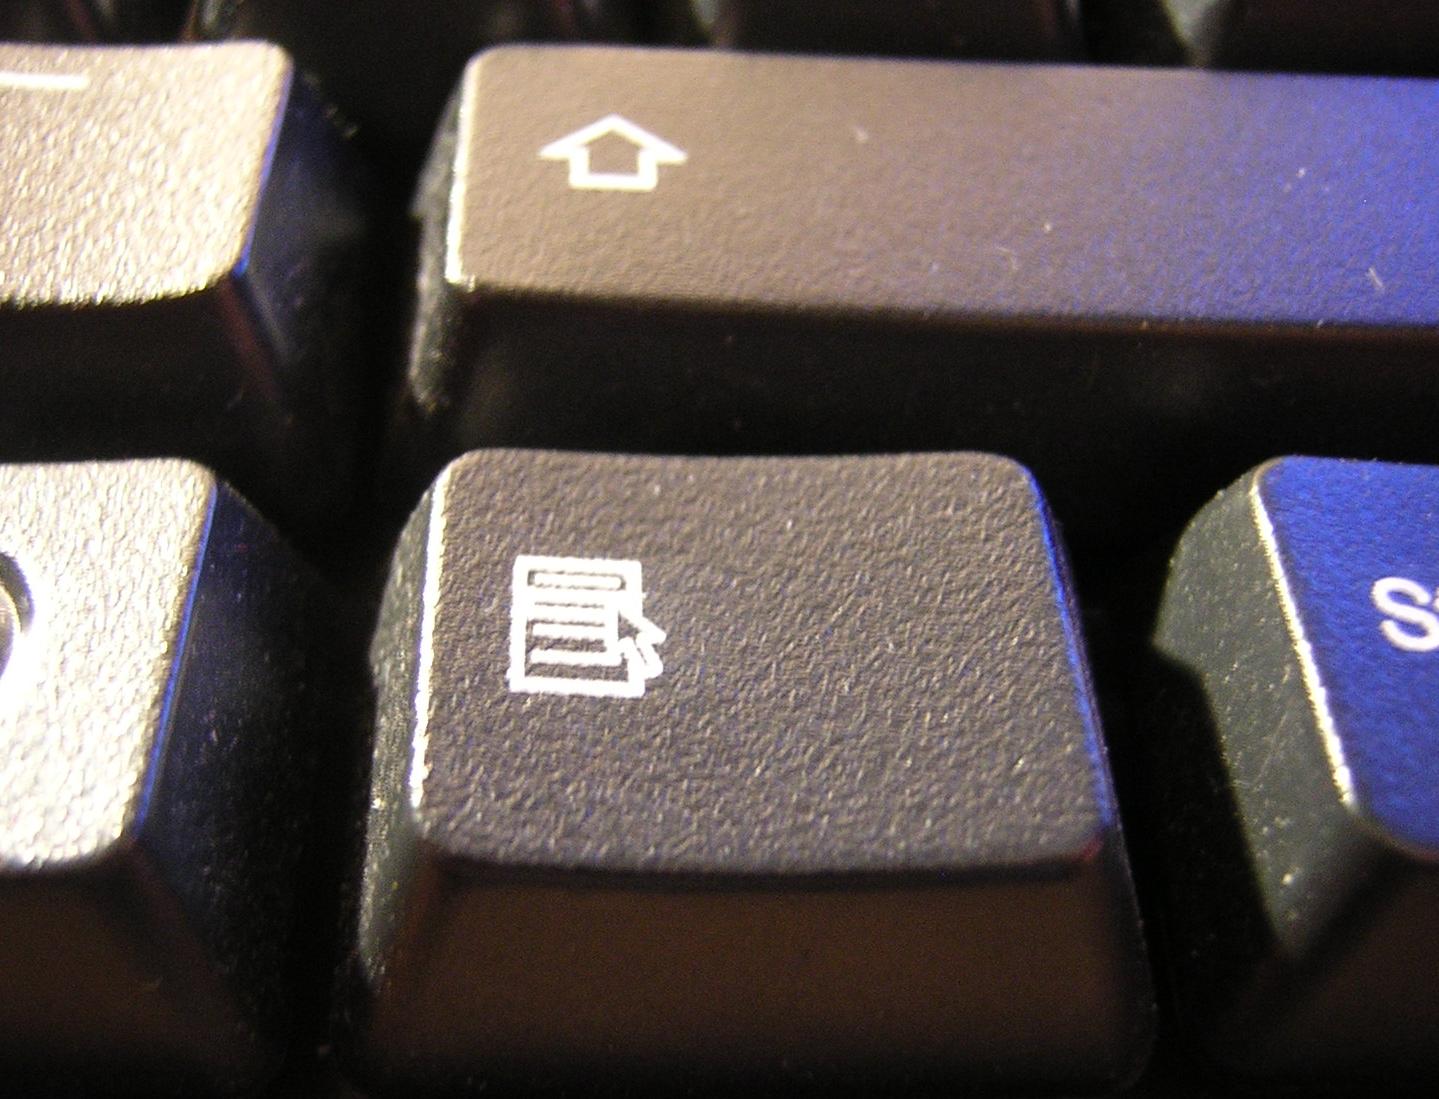 Windows key combination on a keyboard